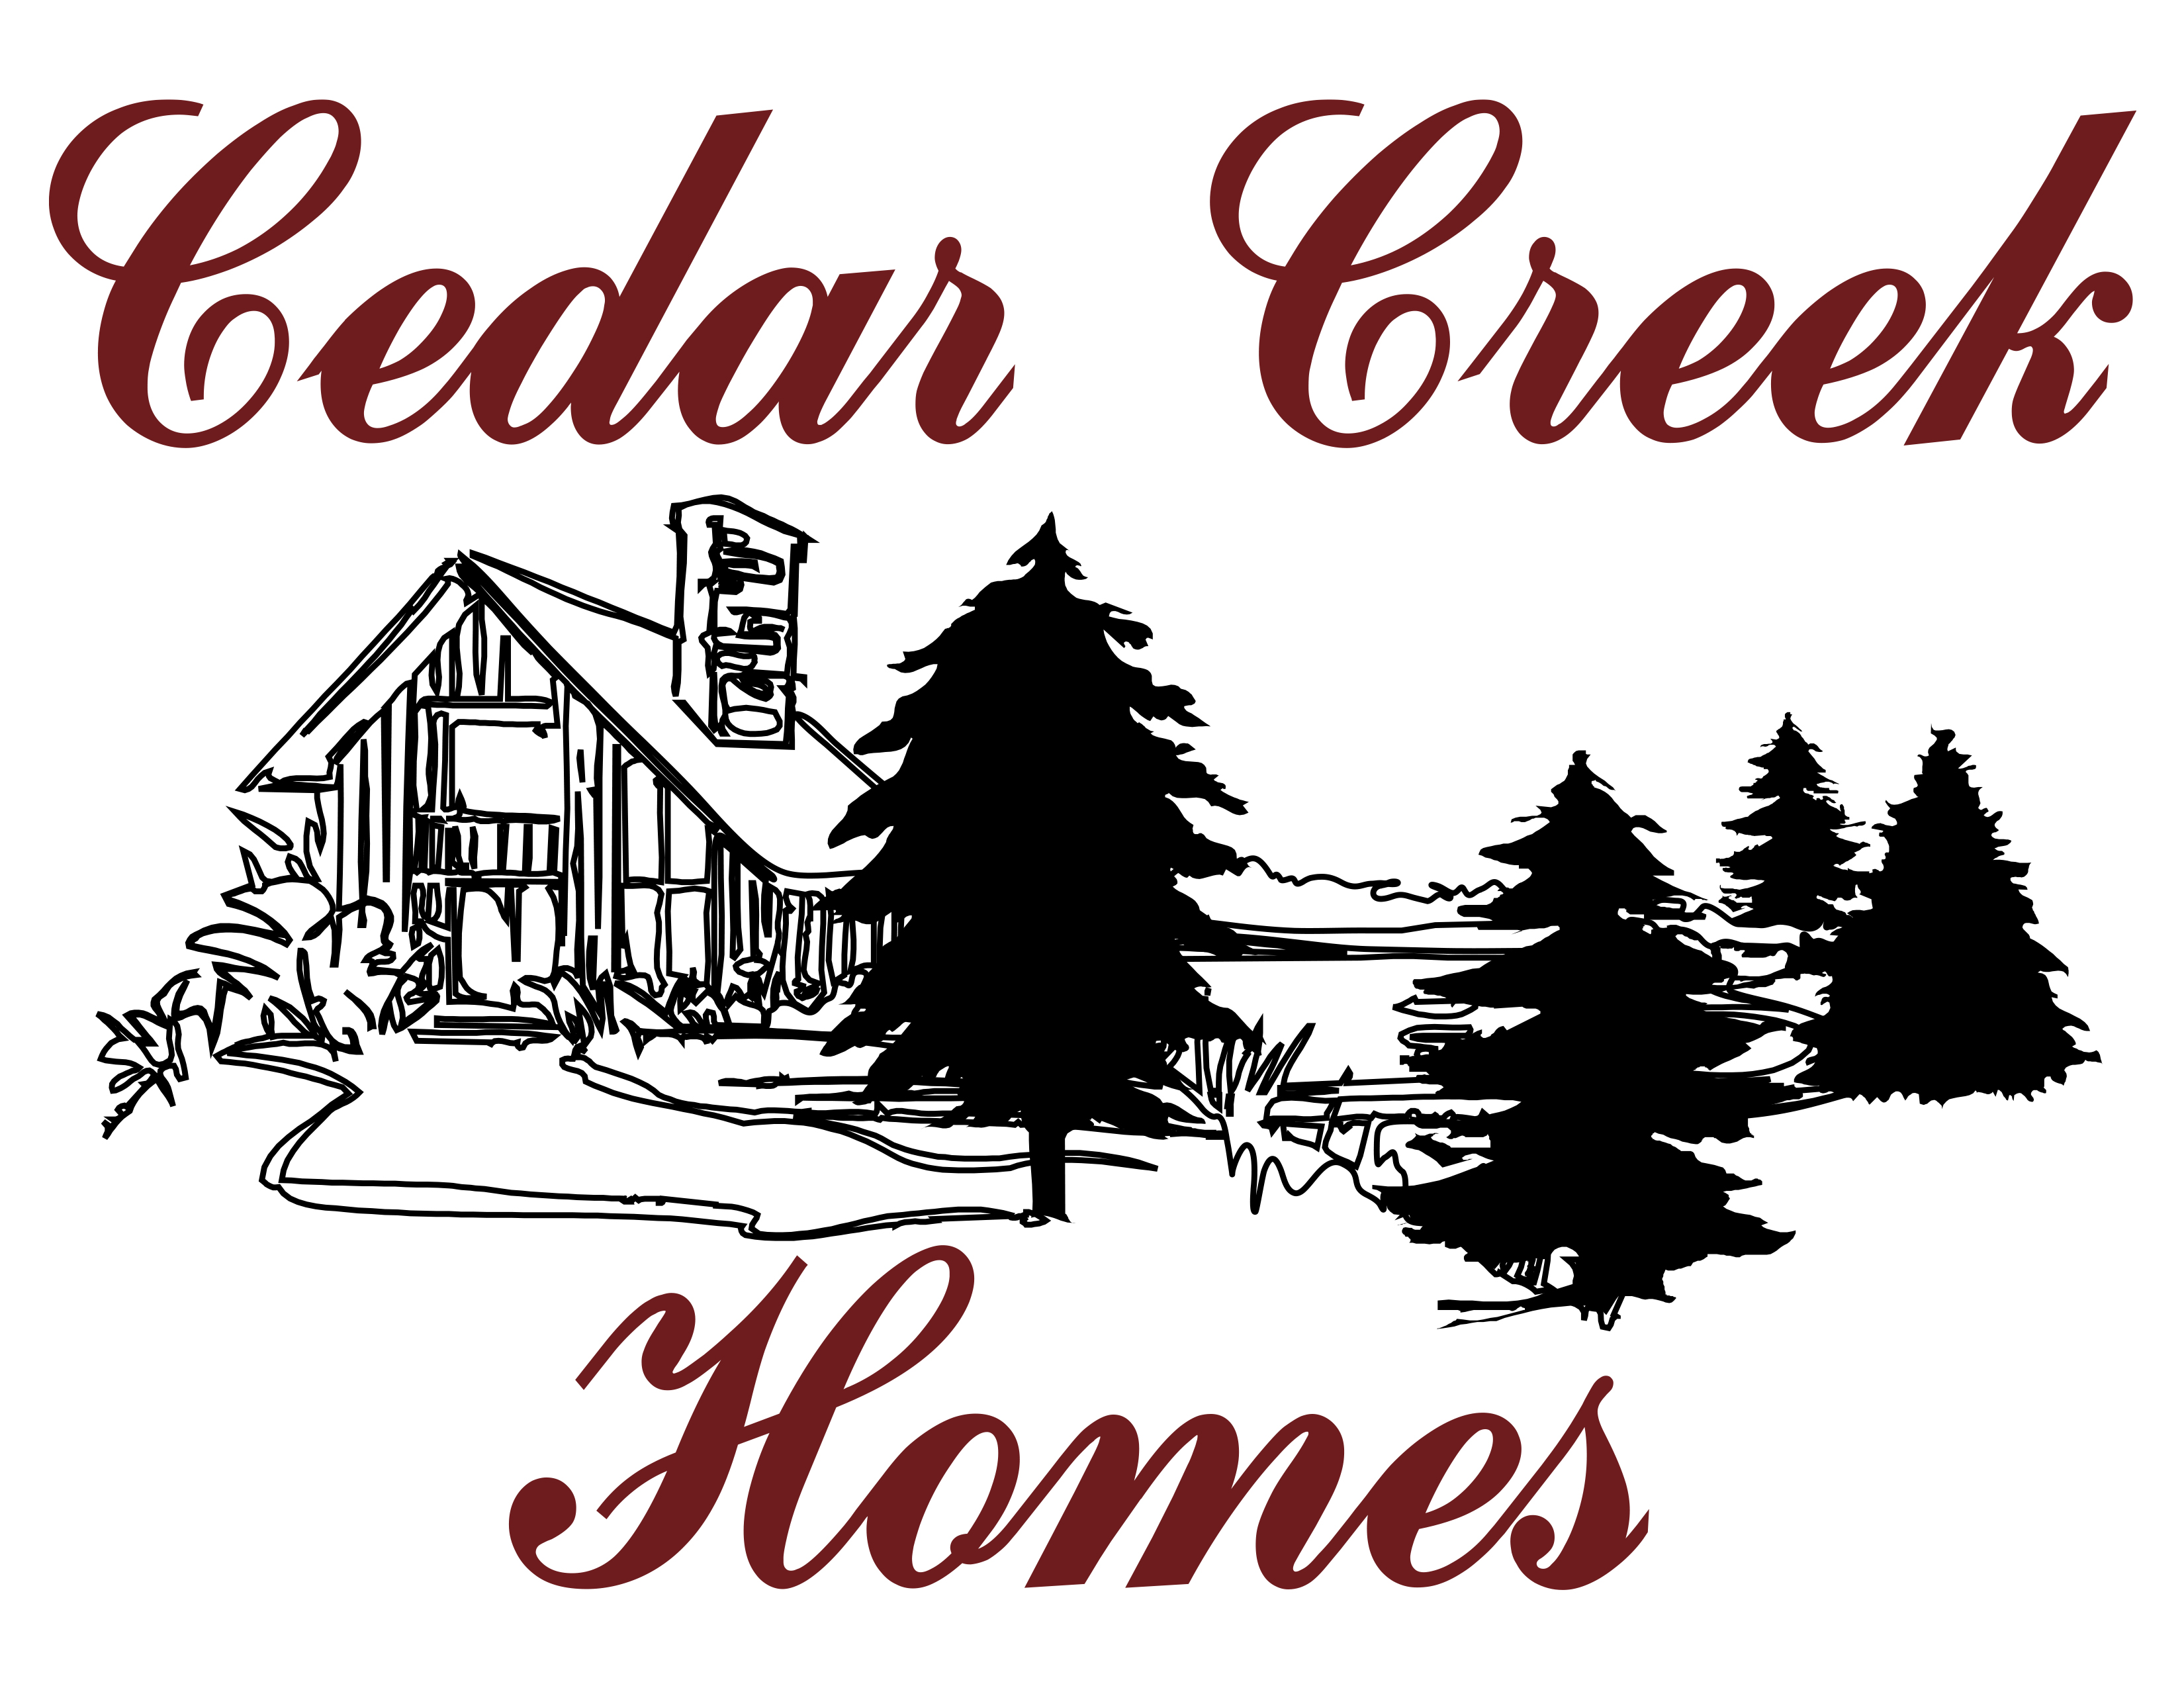 Cedar Creek Homes, LLC company logo